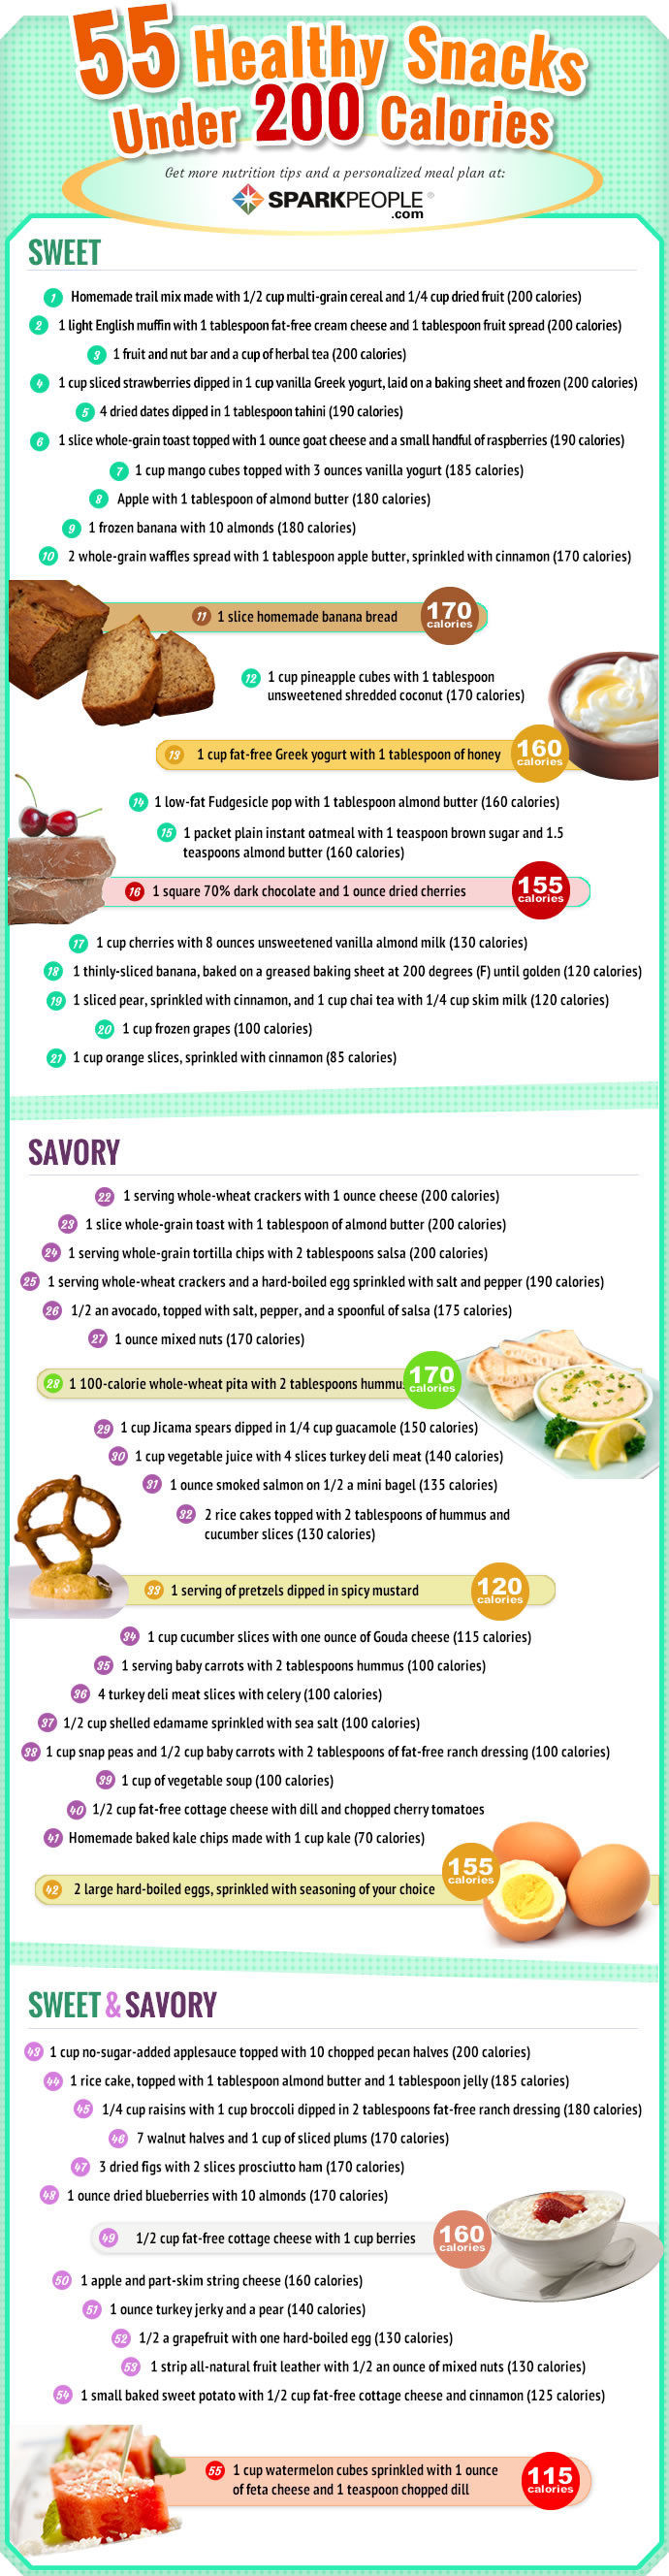 Healthy Snacks Under 200 Calories top 20 55 Healthy Snacks Under 200 Calories S and